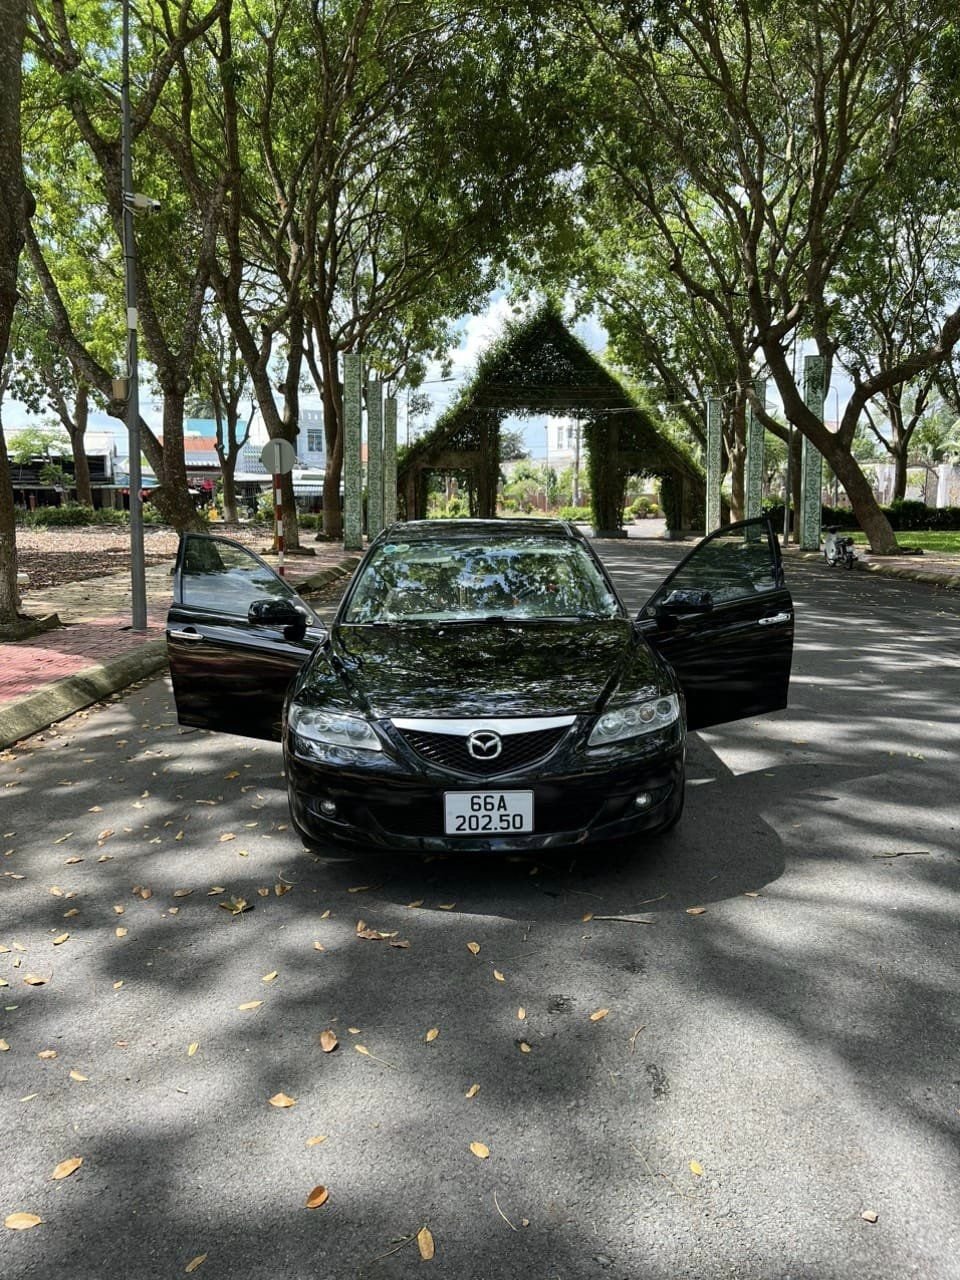 Mazda 6 2003 - Xe màu đen, giá chỉ 162 triệu